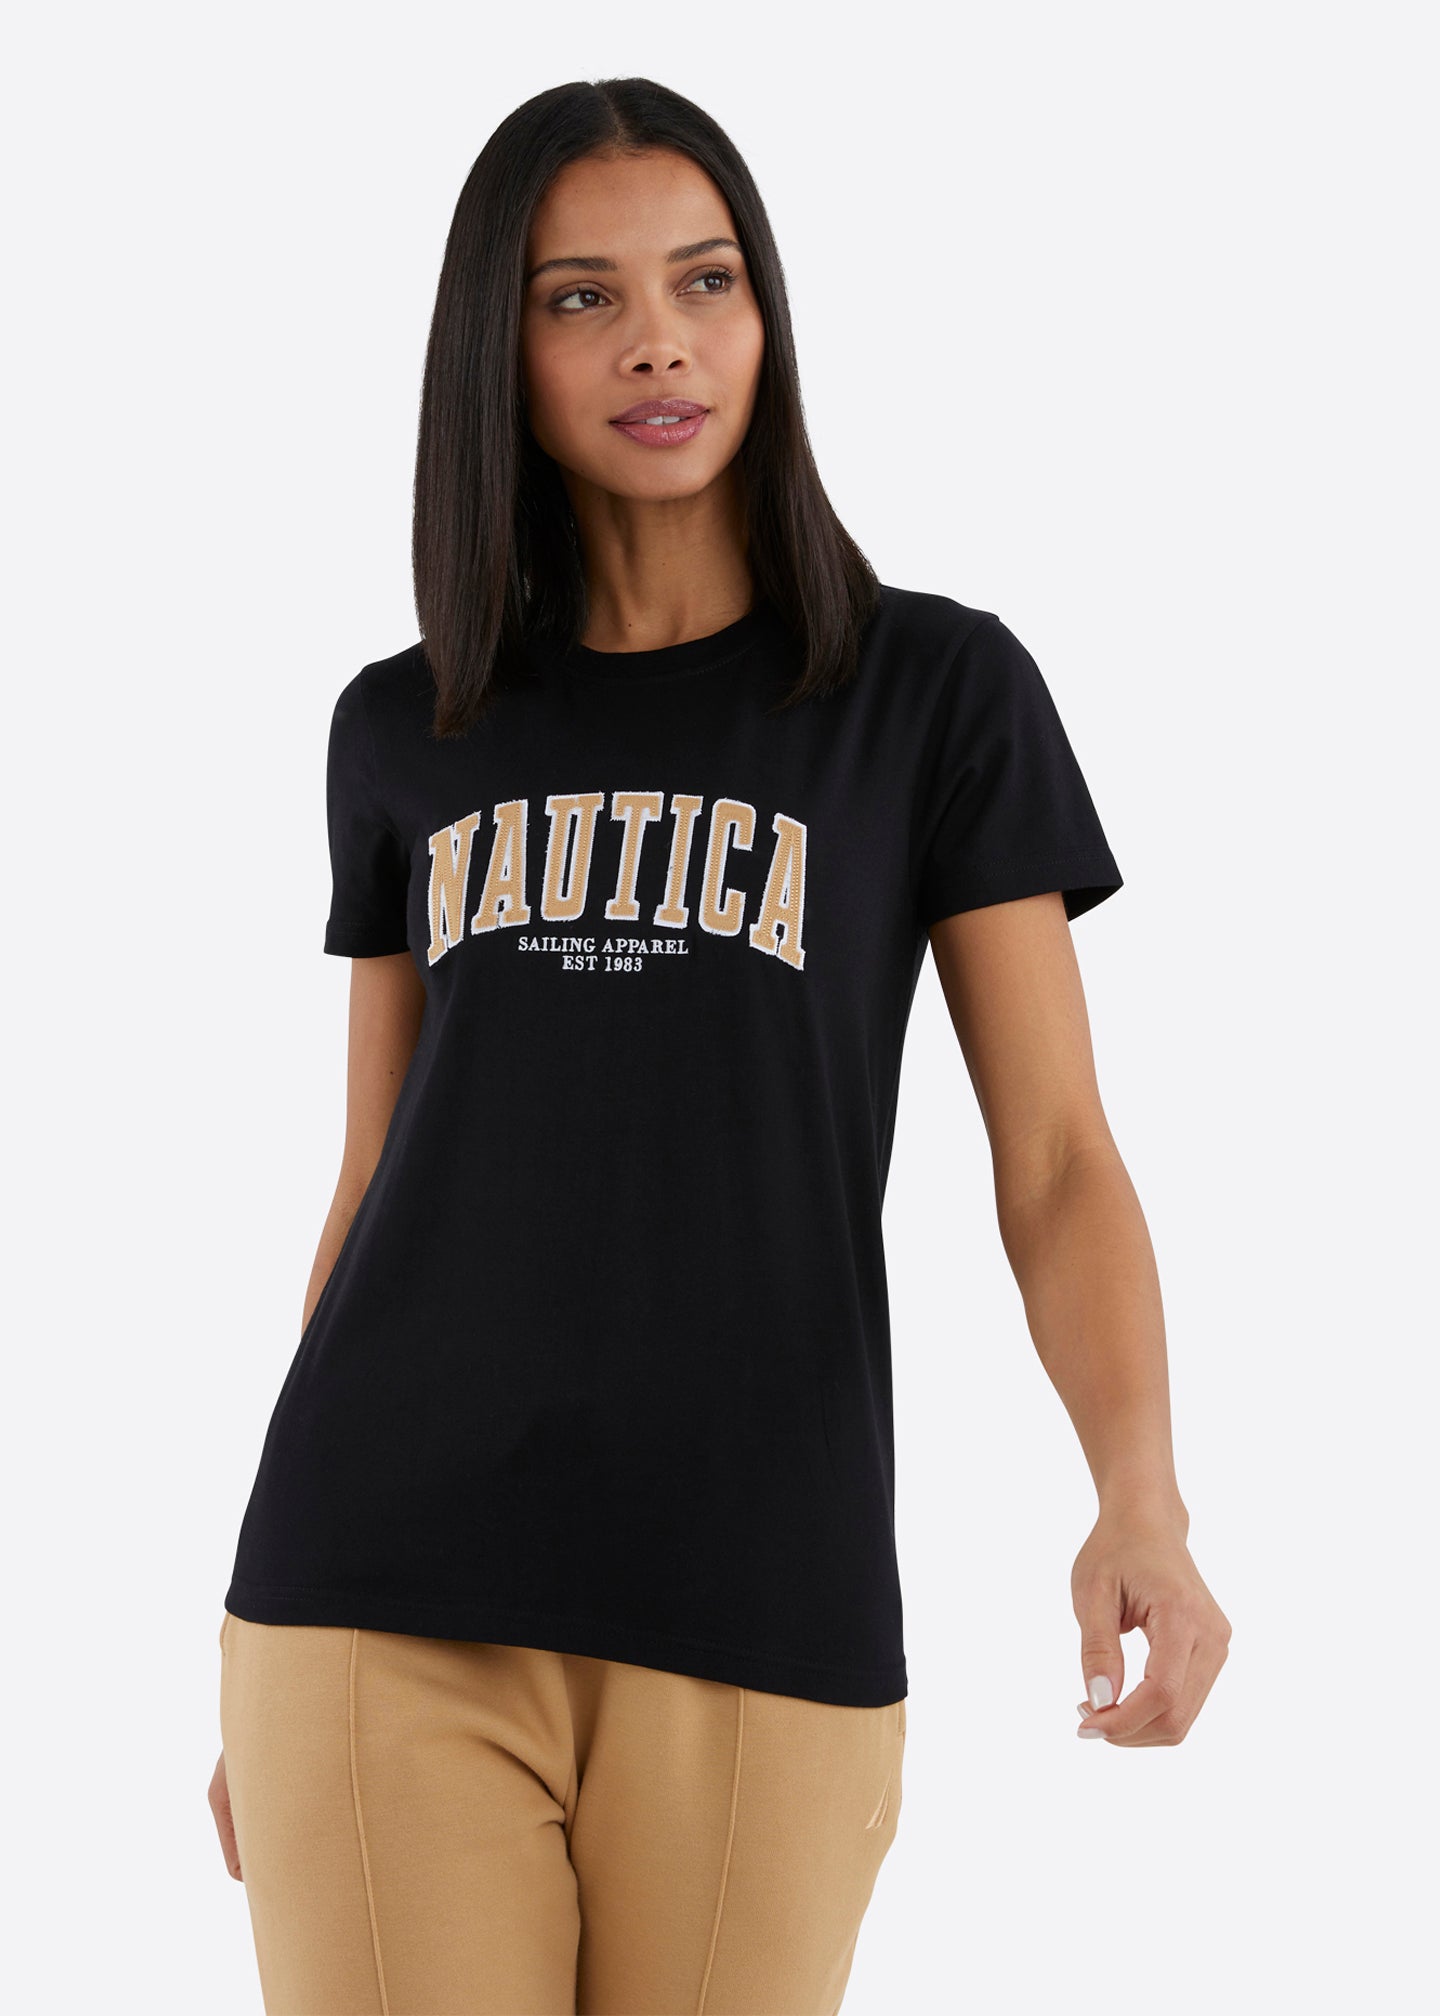 Nautica Emelie T-Shirt - Black - Front